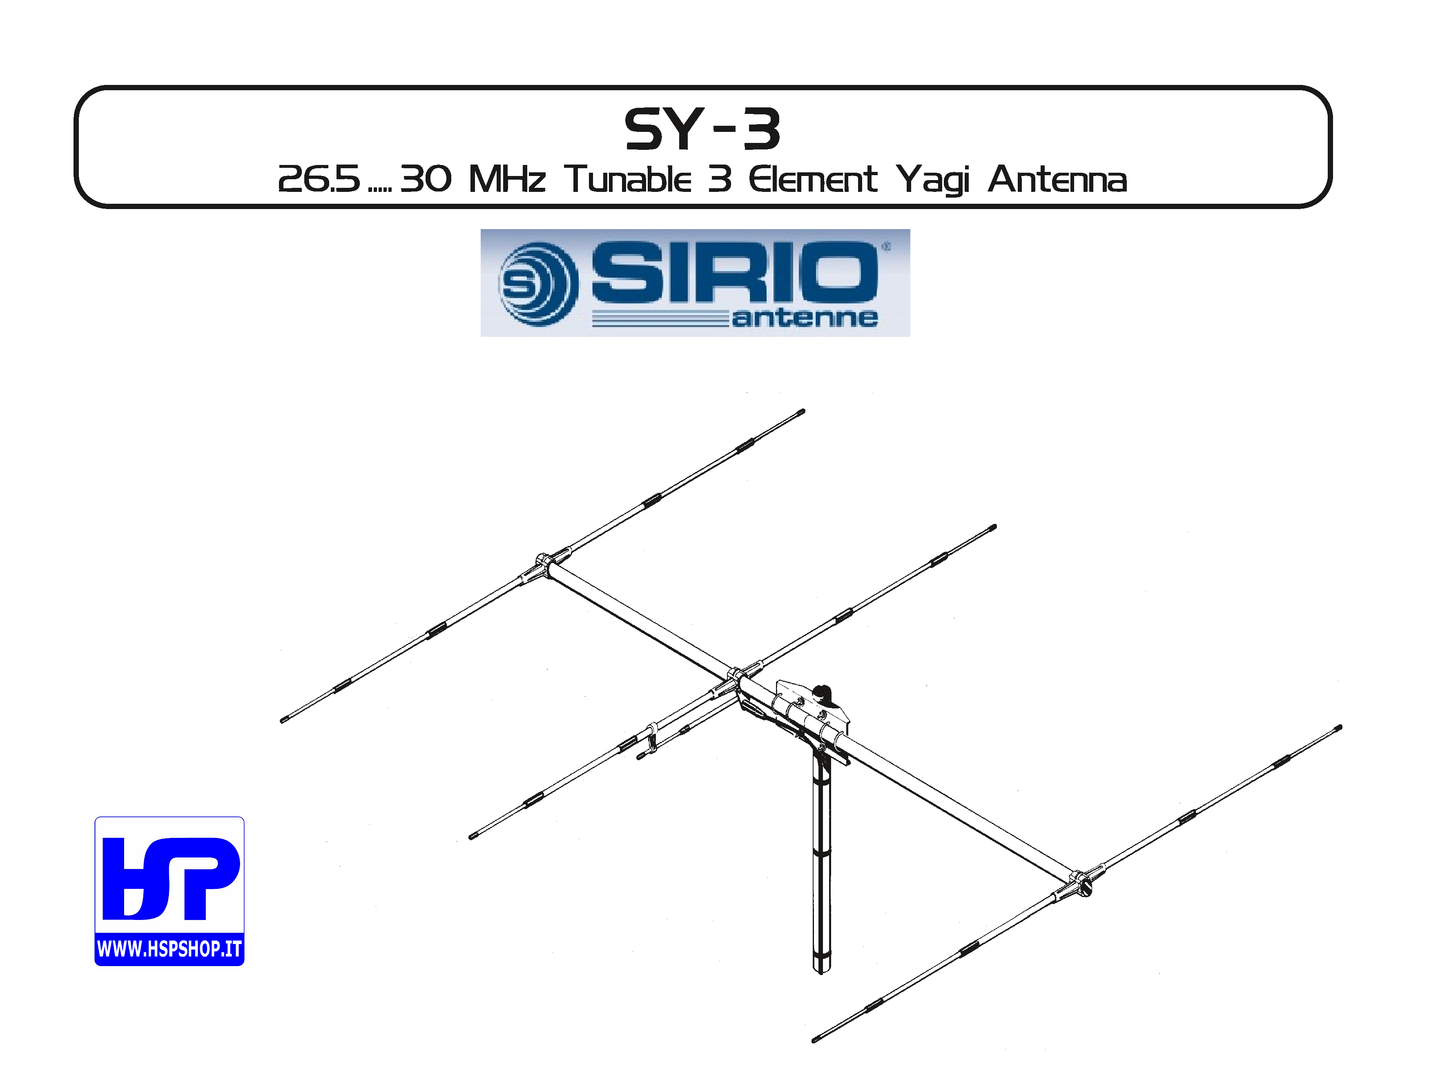 SIRIO - SY-3 - 3 ELEMENT BEAM 26.5-30 MHz